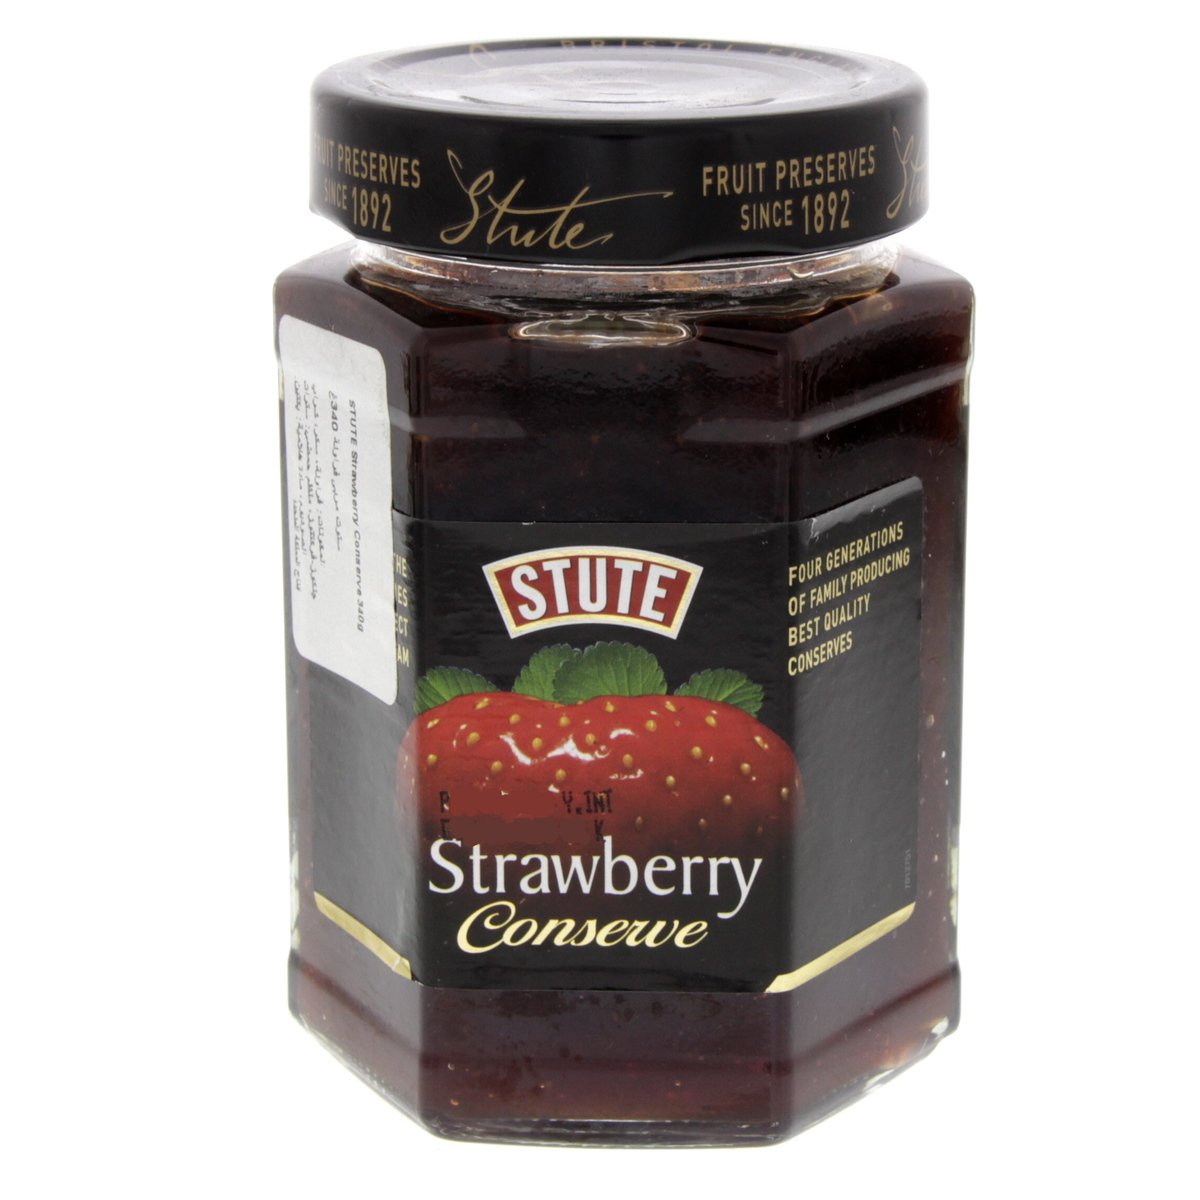 Stute Strawberry Conserve 340 g